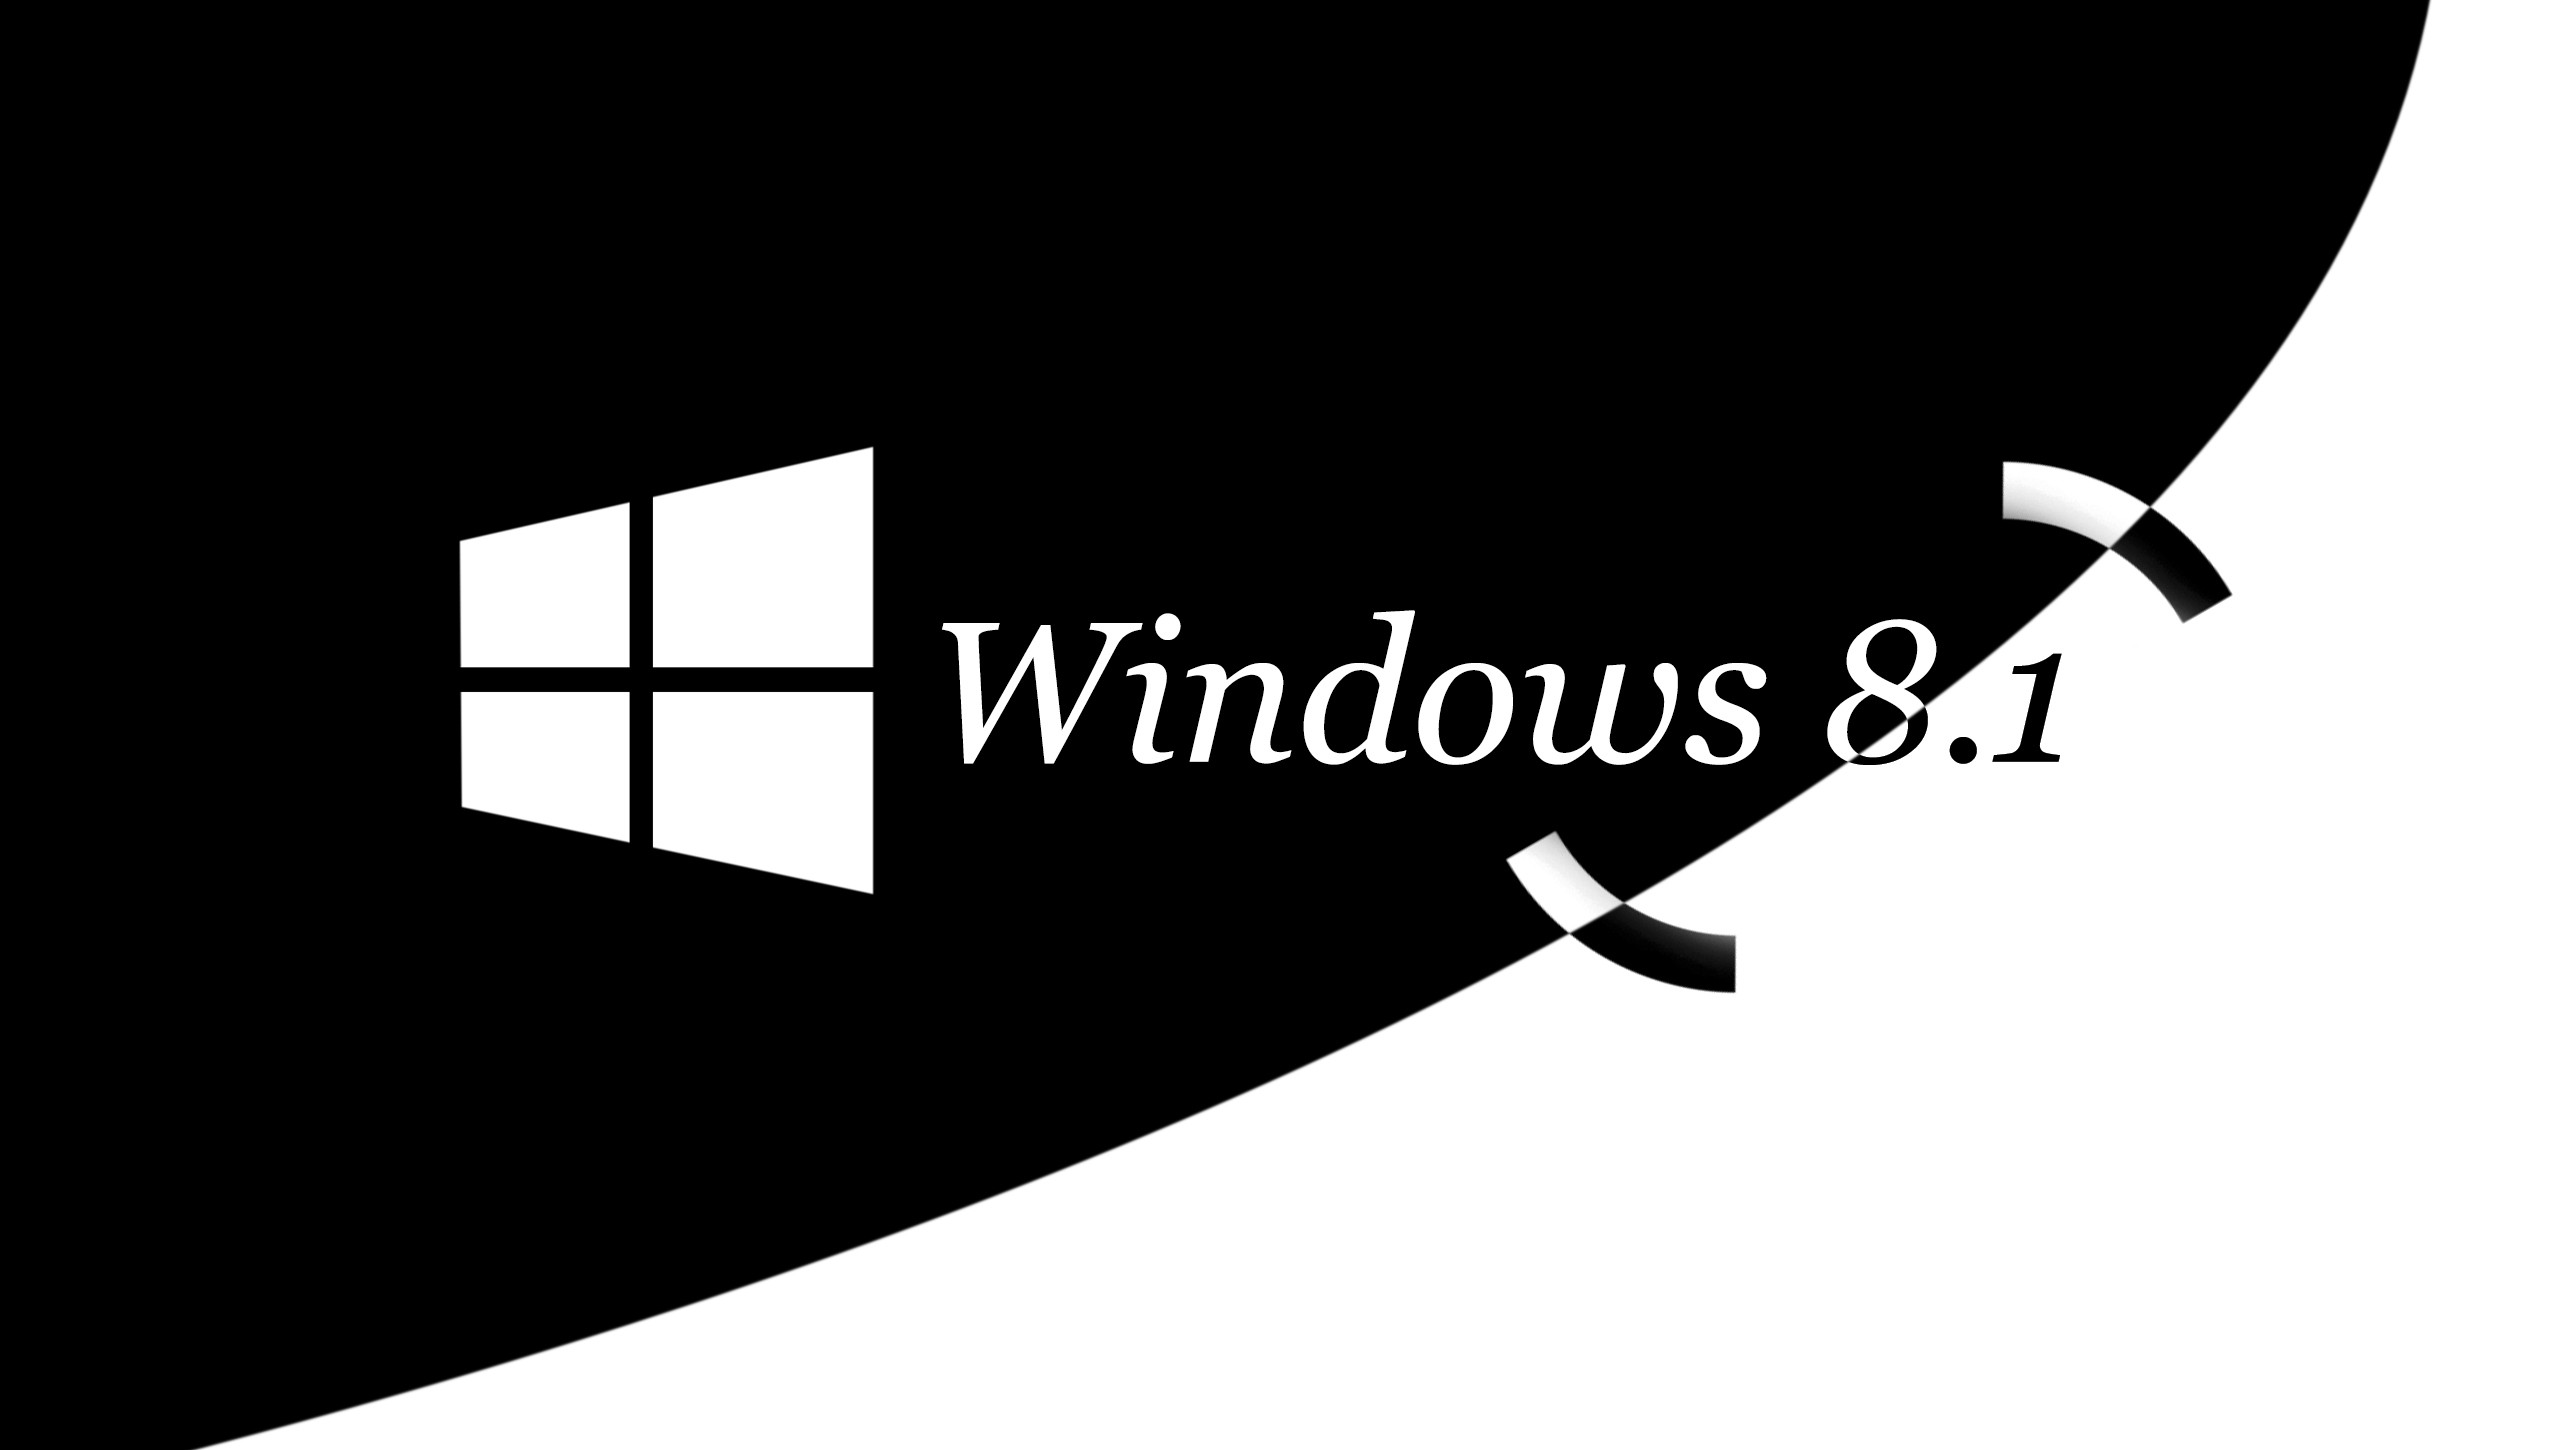 General 2560x1450 Windows 8 operating system Microsoft Windows logo monochrome